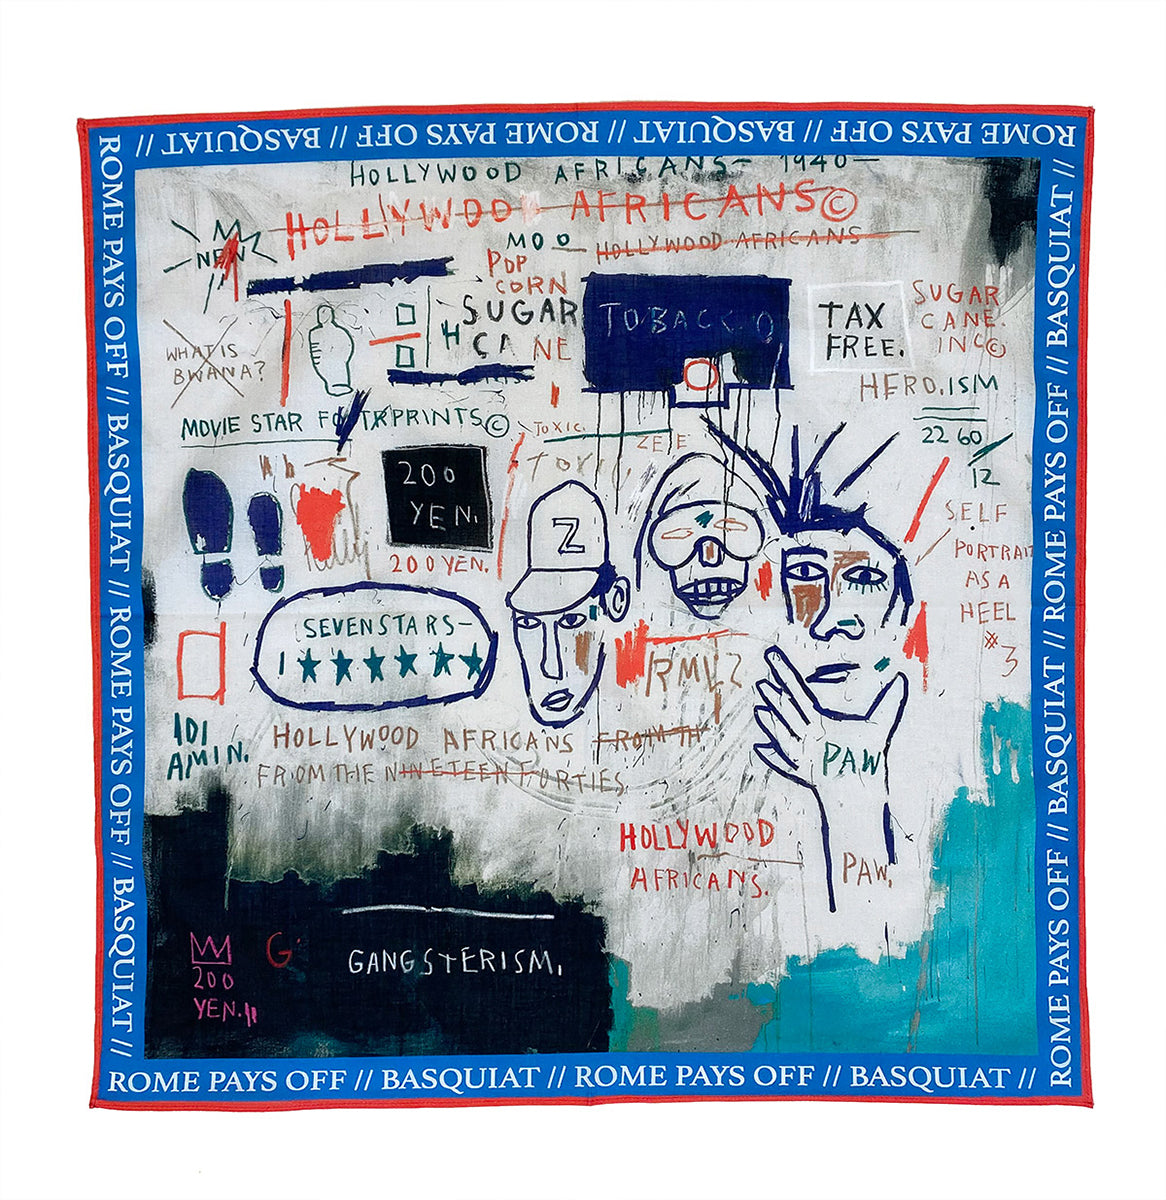 Basquiat "Hollywood Africans" Bandana